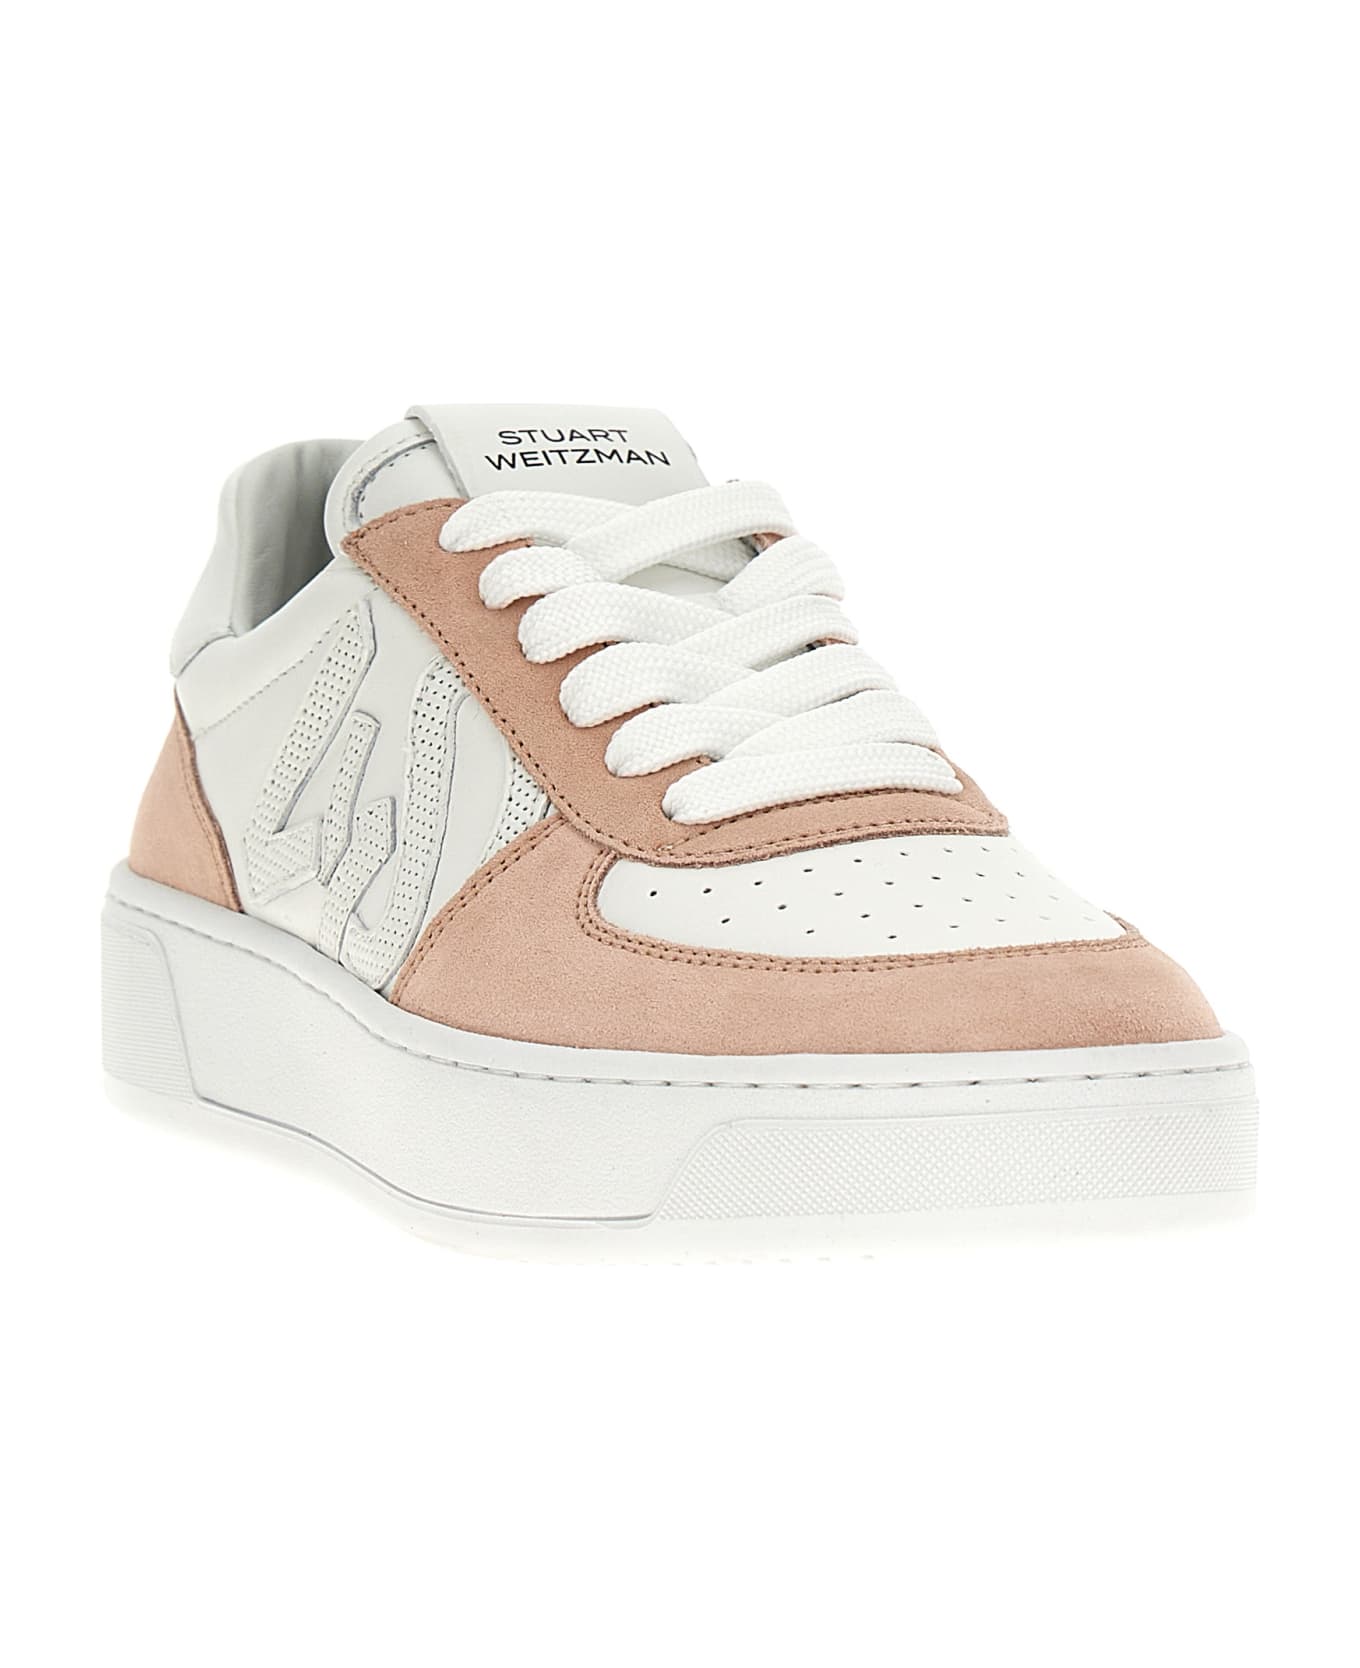 Stuart Weitzman 'courtside Monogram' Sneakers - Pink スニーカー